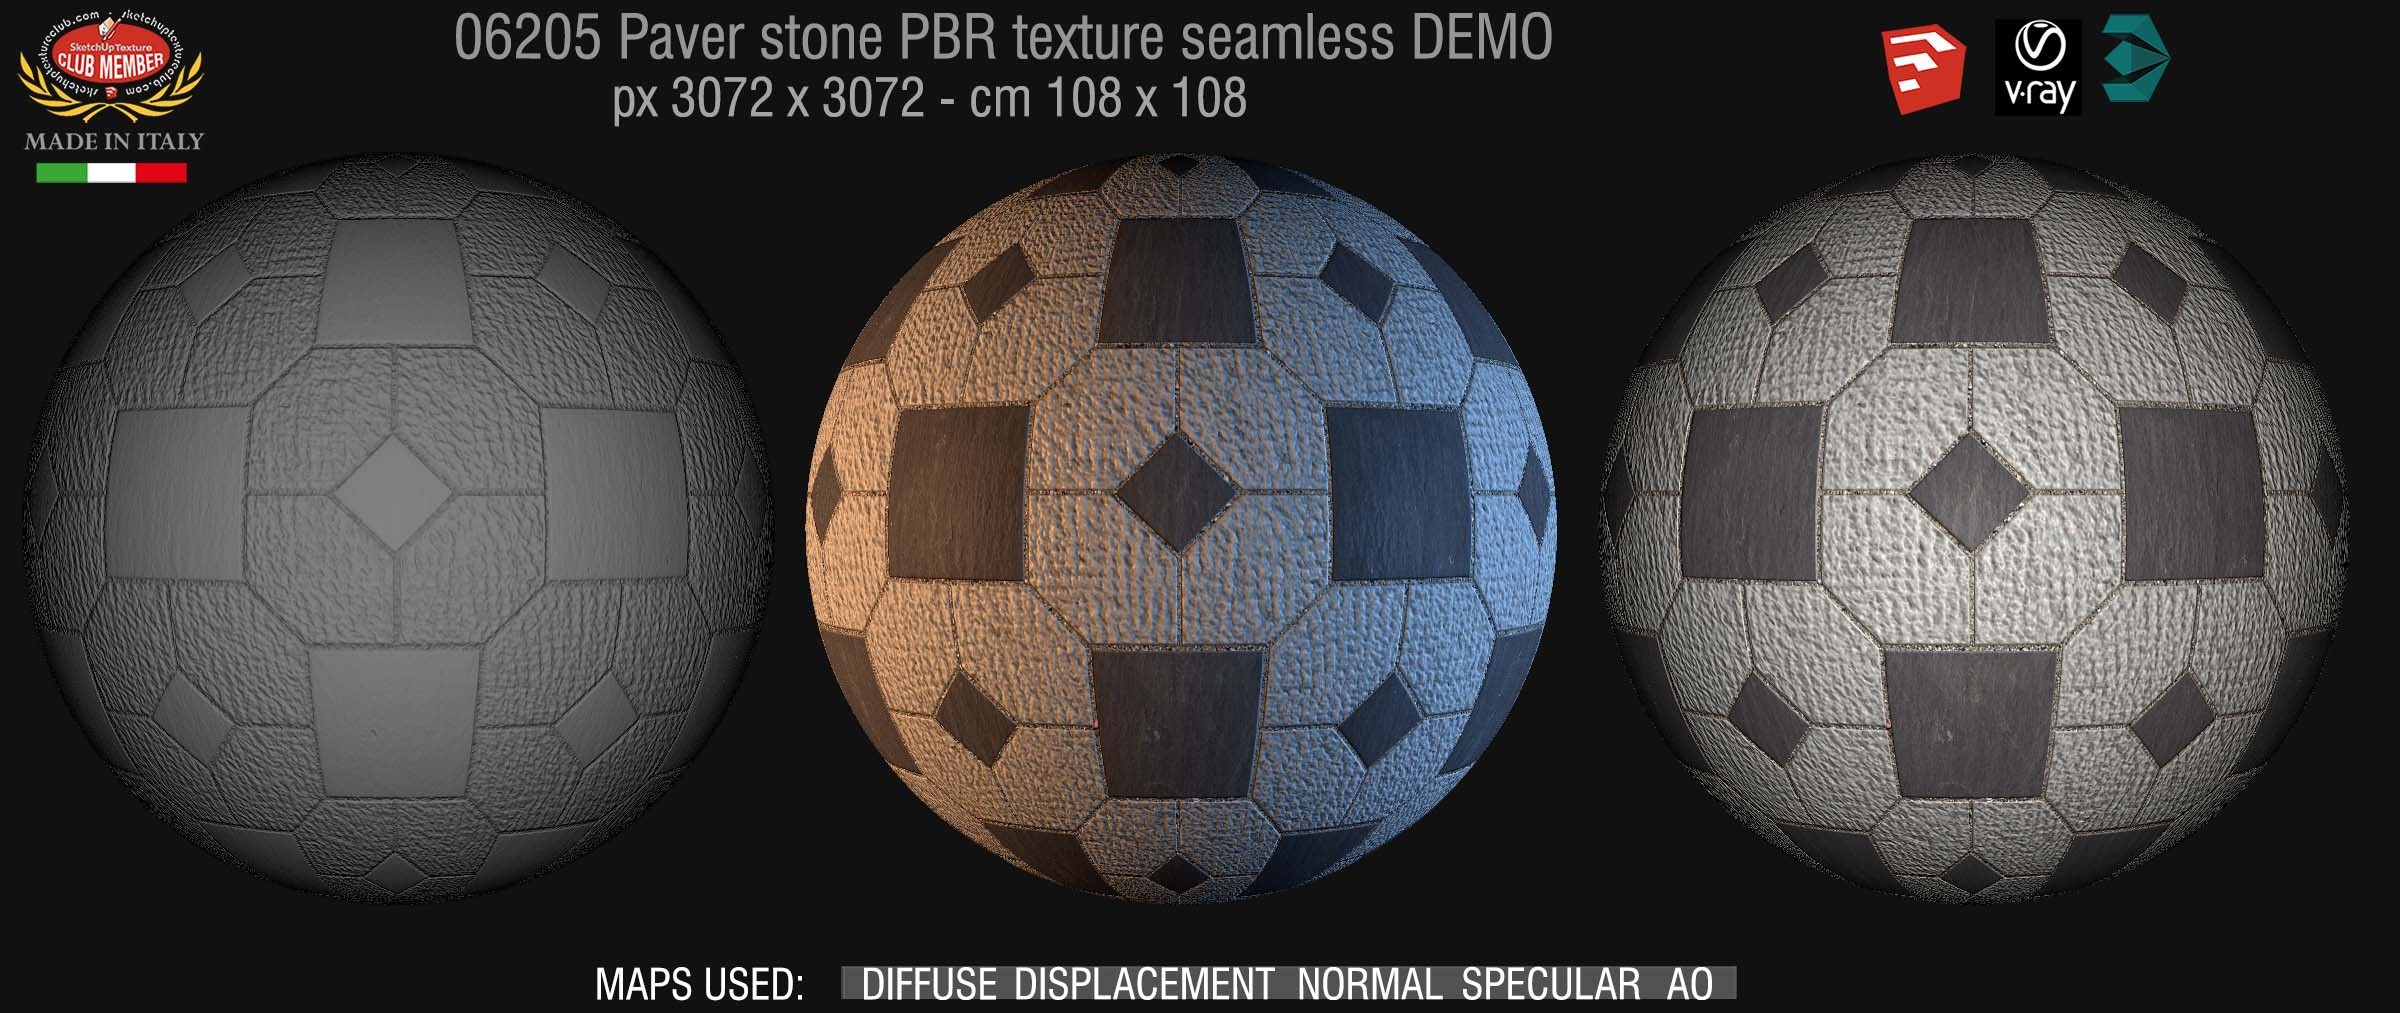 06205 Pavers stone PBR texture seamless DEMO